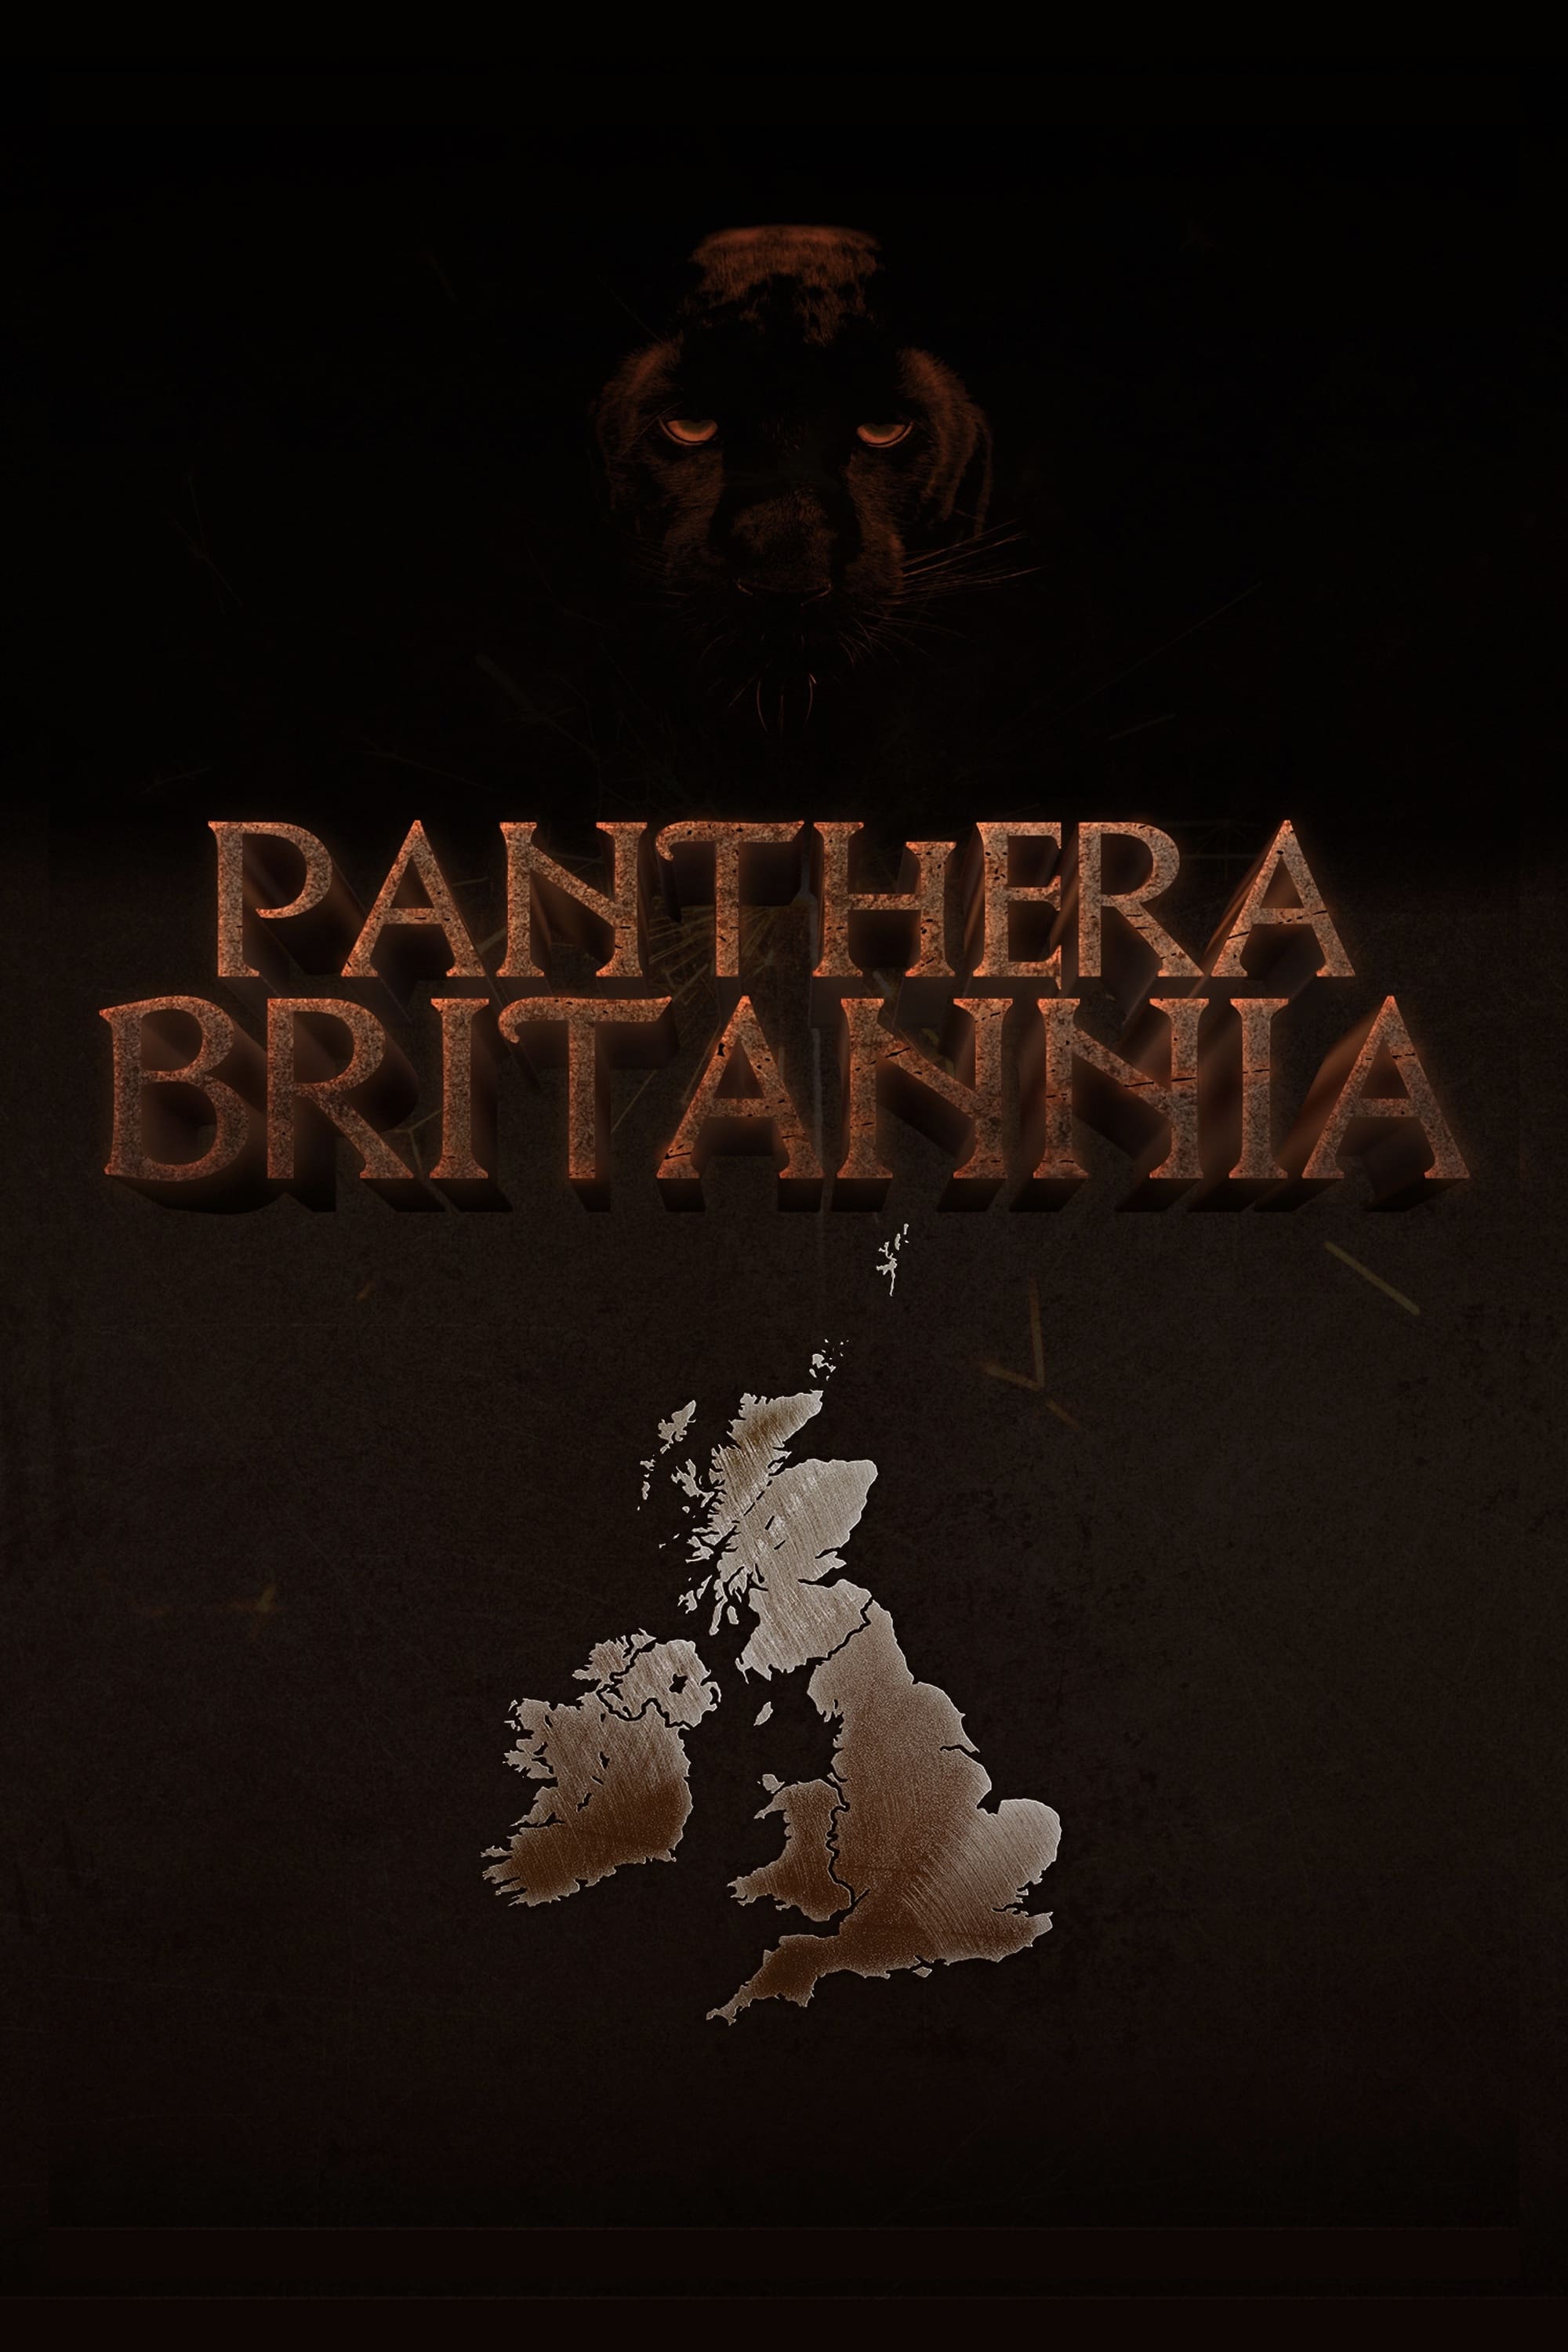 Panthera Britannia